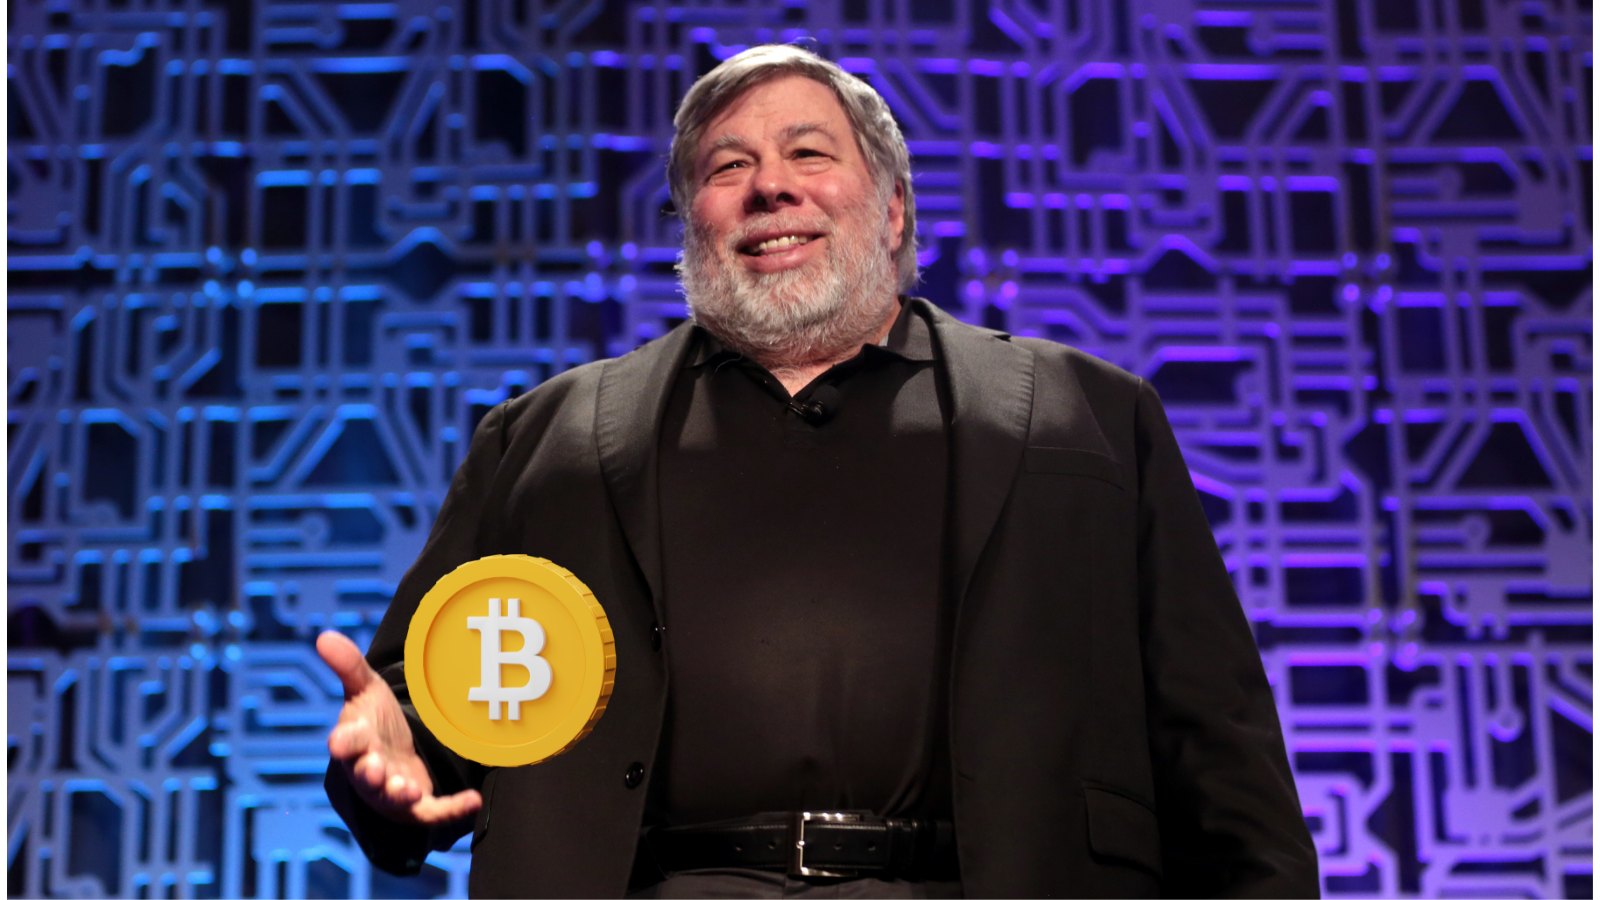 Steve wozniak ethereum apple cnbc the bitcoin code review